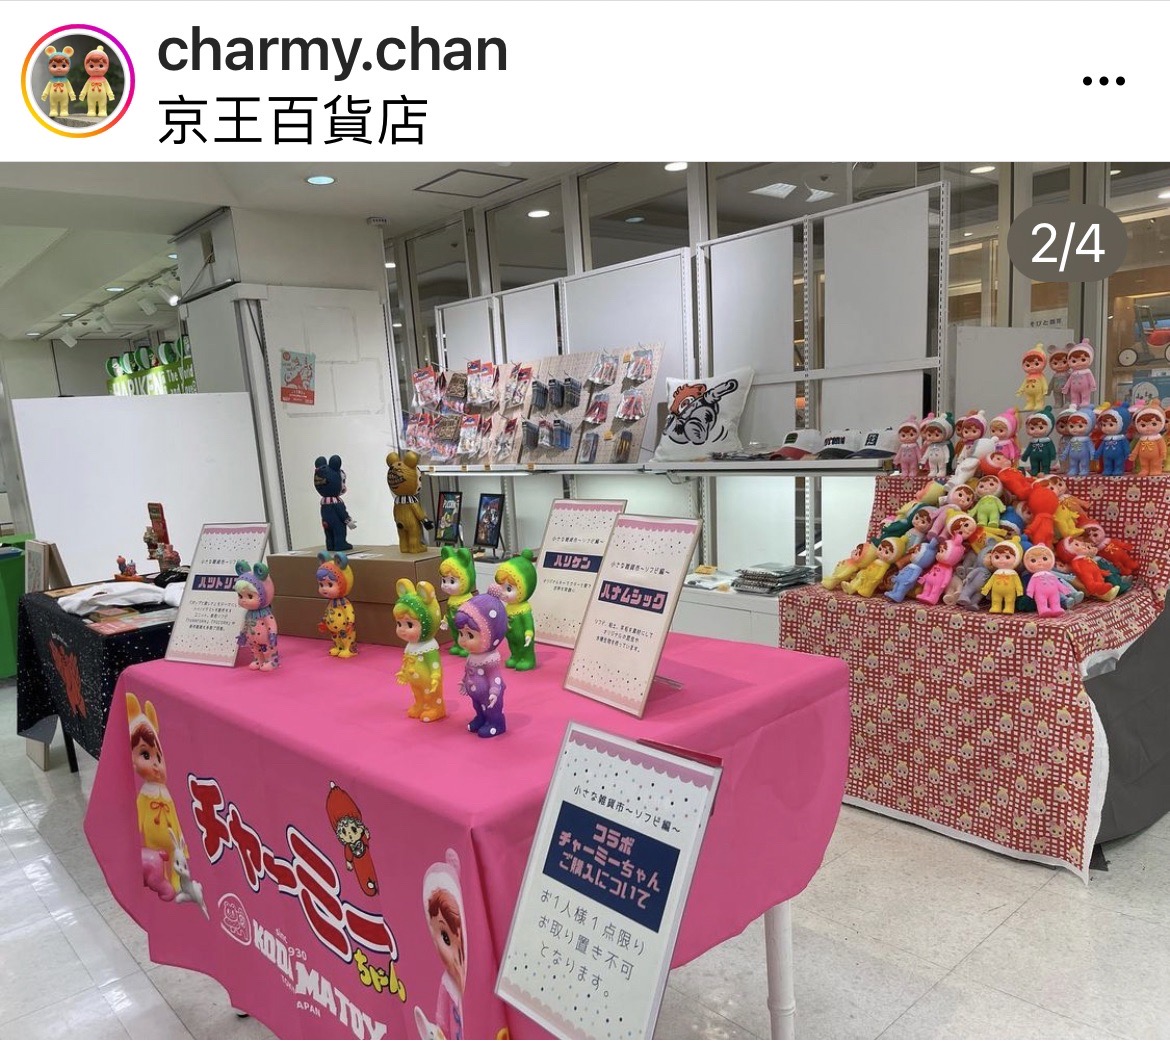 Charmy chan 日本展覽 小さな雑貨市～ソフビ展 in 京王新宿